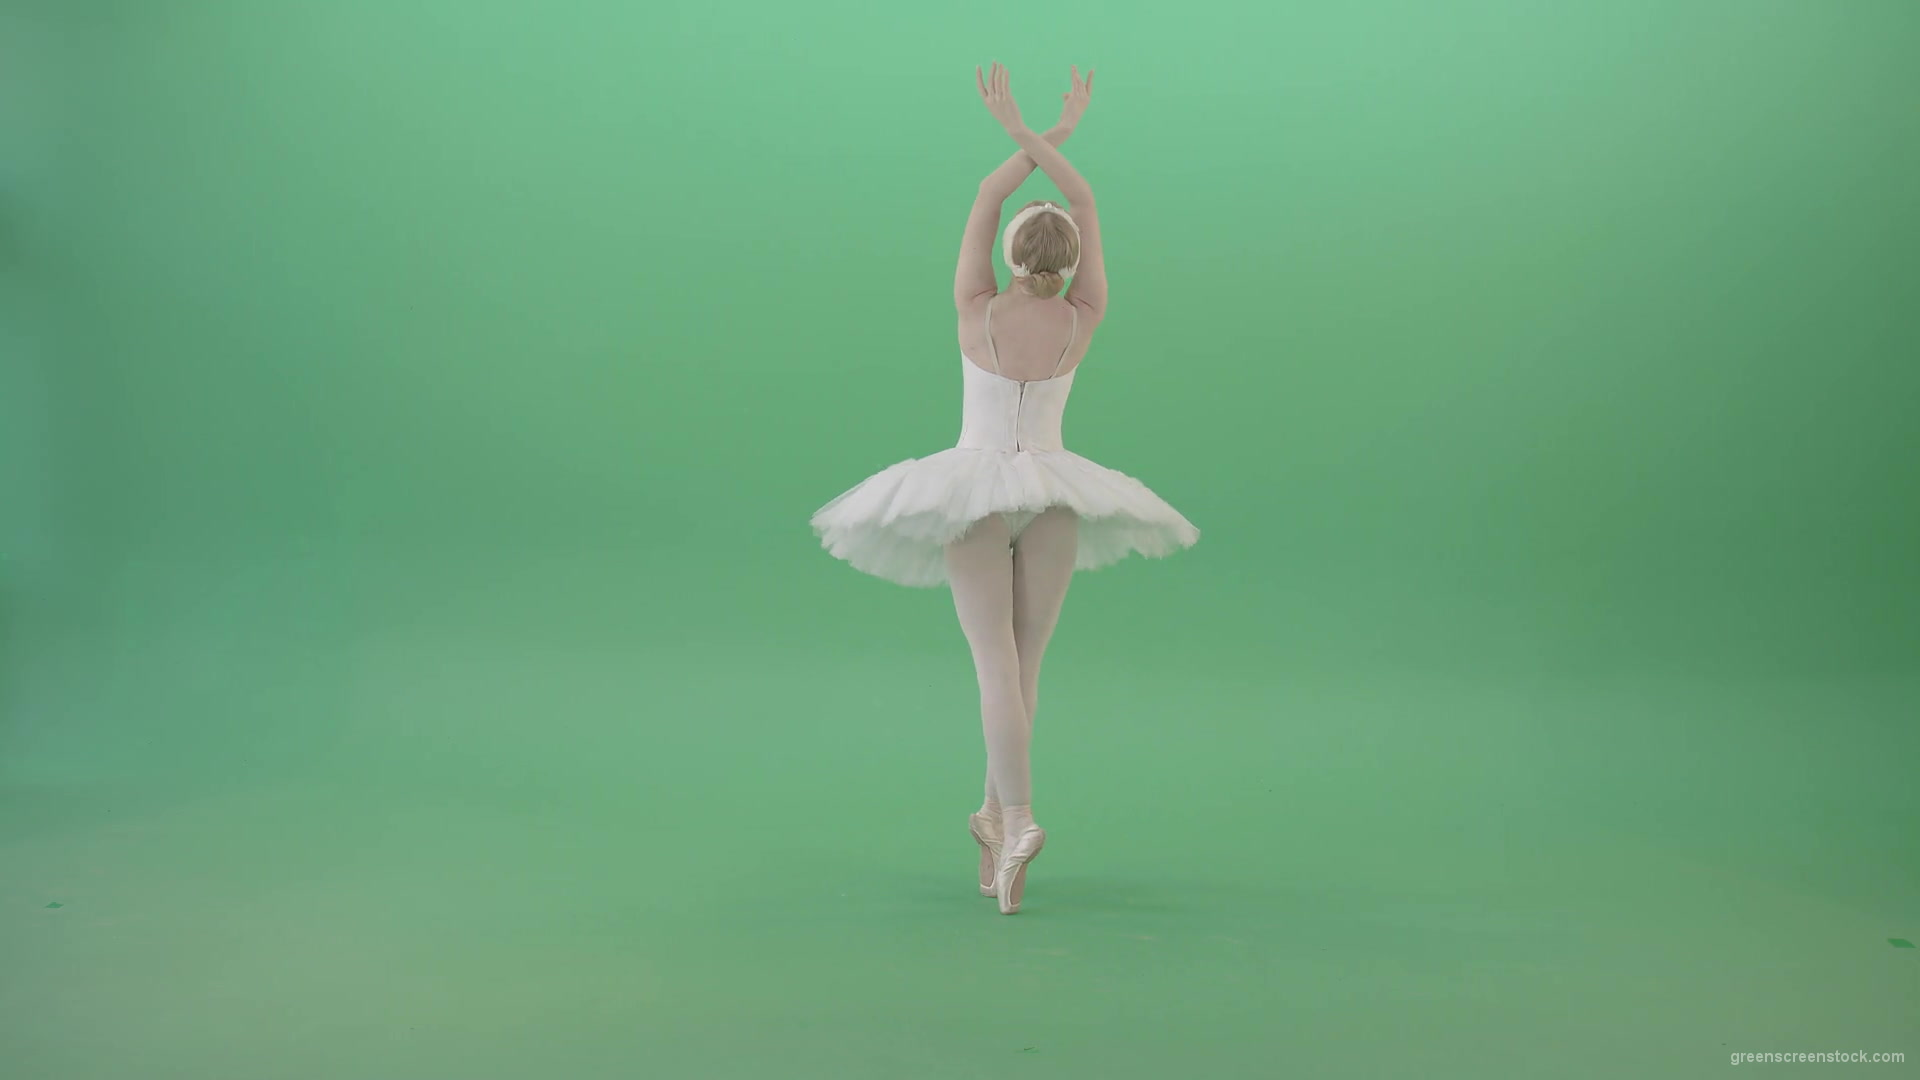 Beautiful-swan-lake-ballet-dance-ballerina-in-back-side-view-dancing-on-green-screen-4K-Video-Footage-1920_007 Green Screen Stock